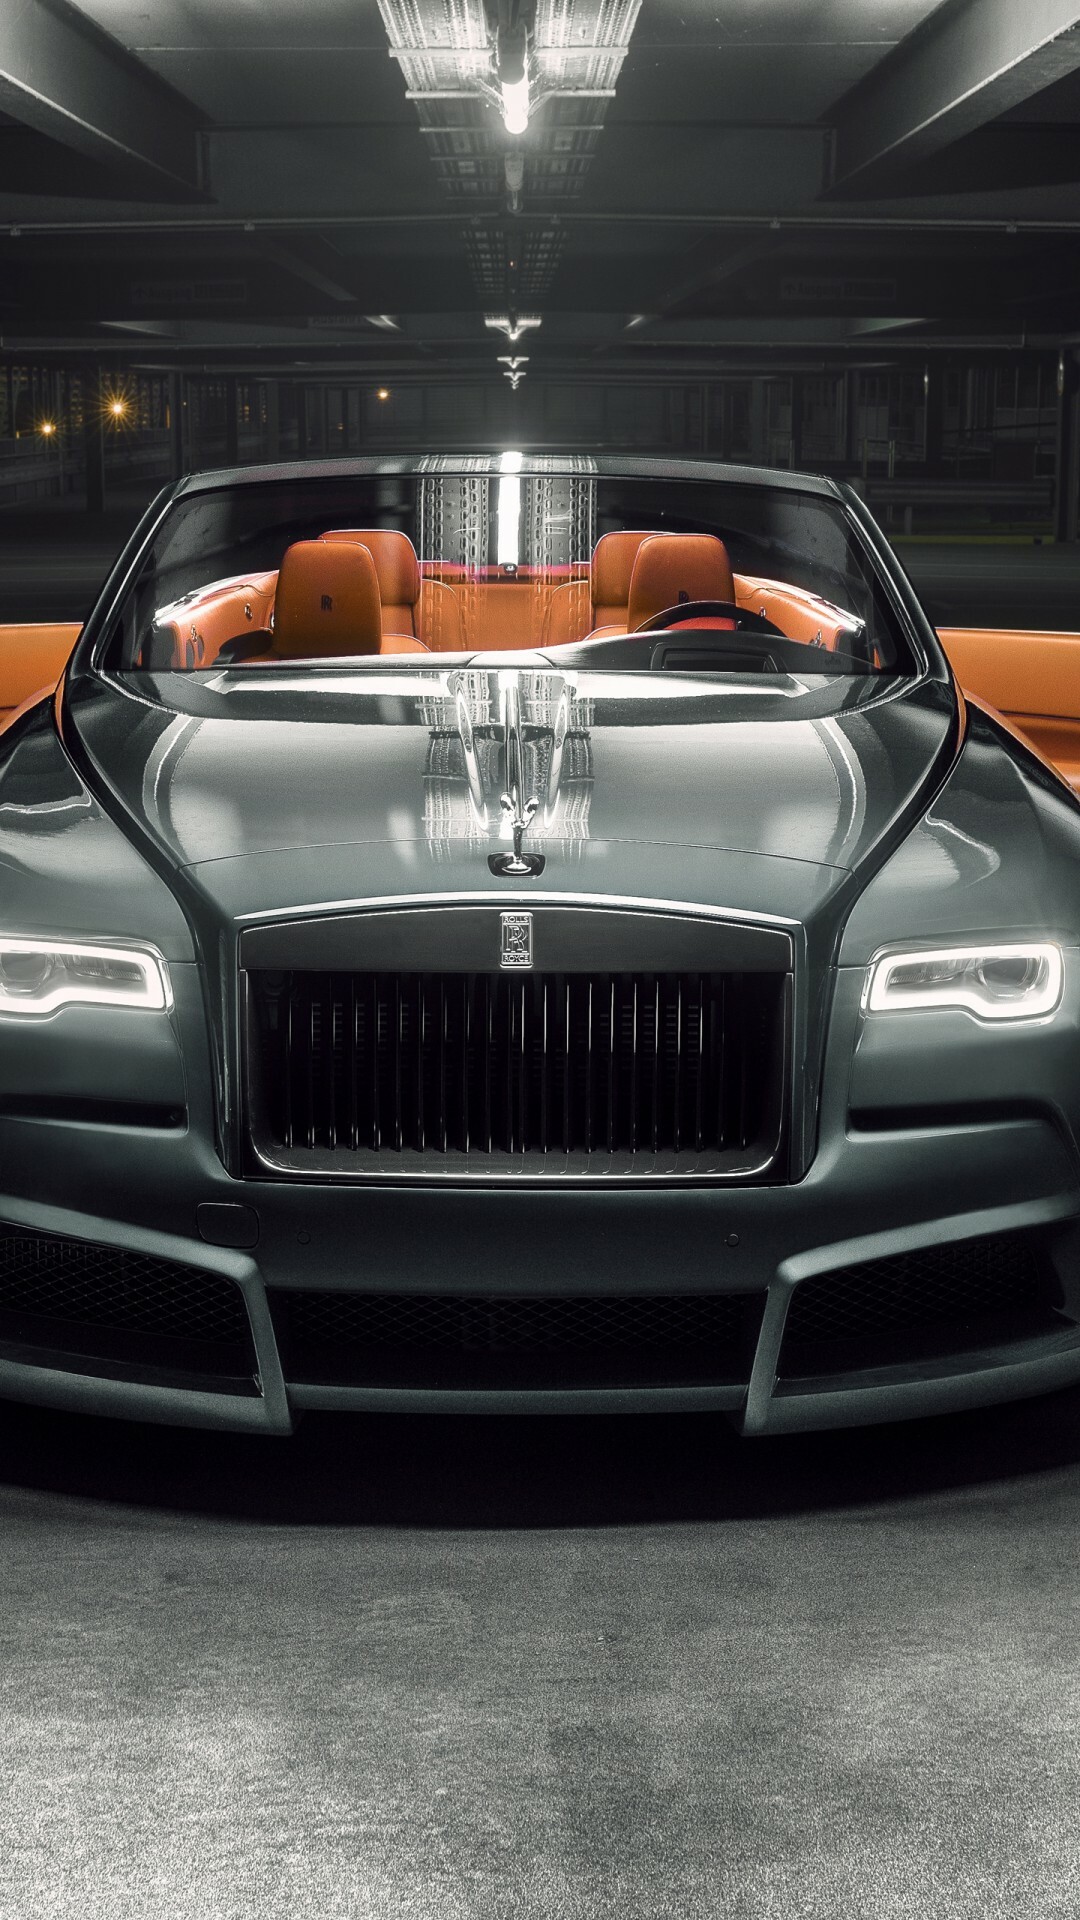 Rolls-Royce: Model Dawn Overdose By Spofec 2017, British luxury cars. 1080x1920 Full HD Wallpaper.